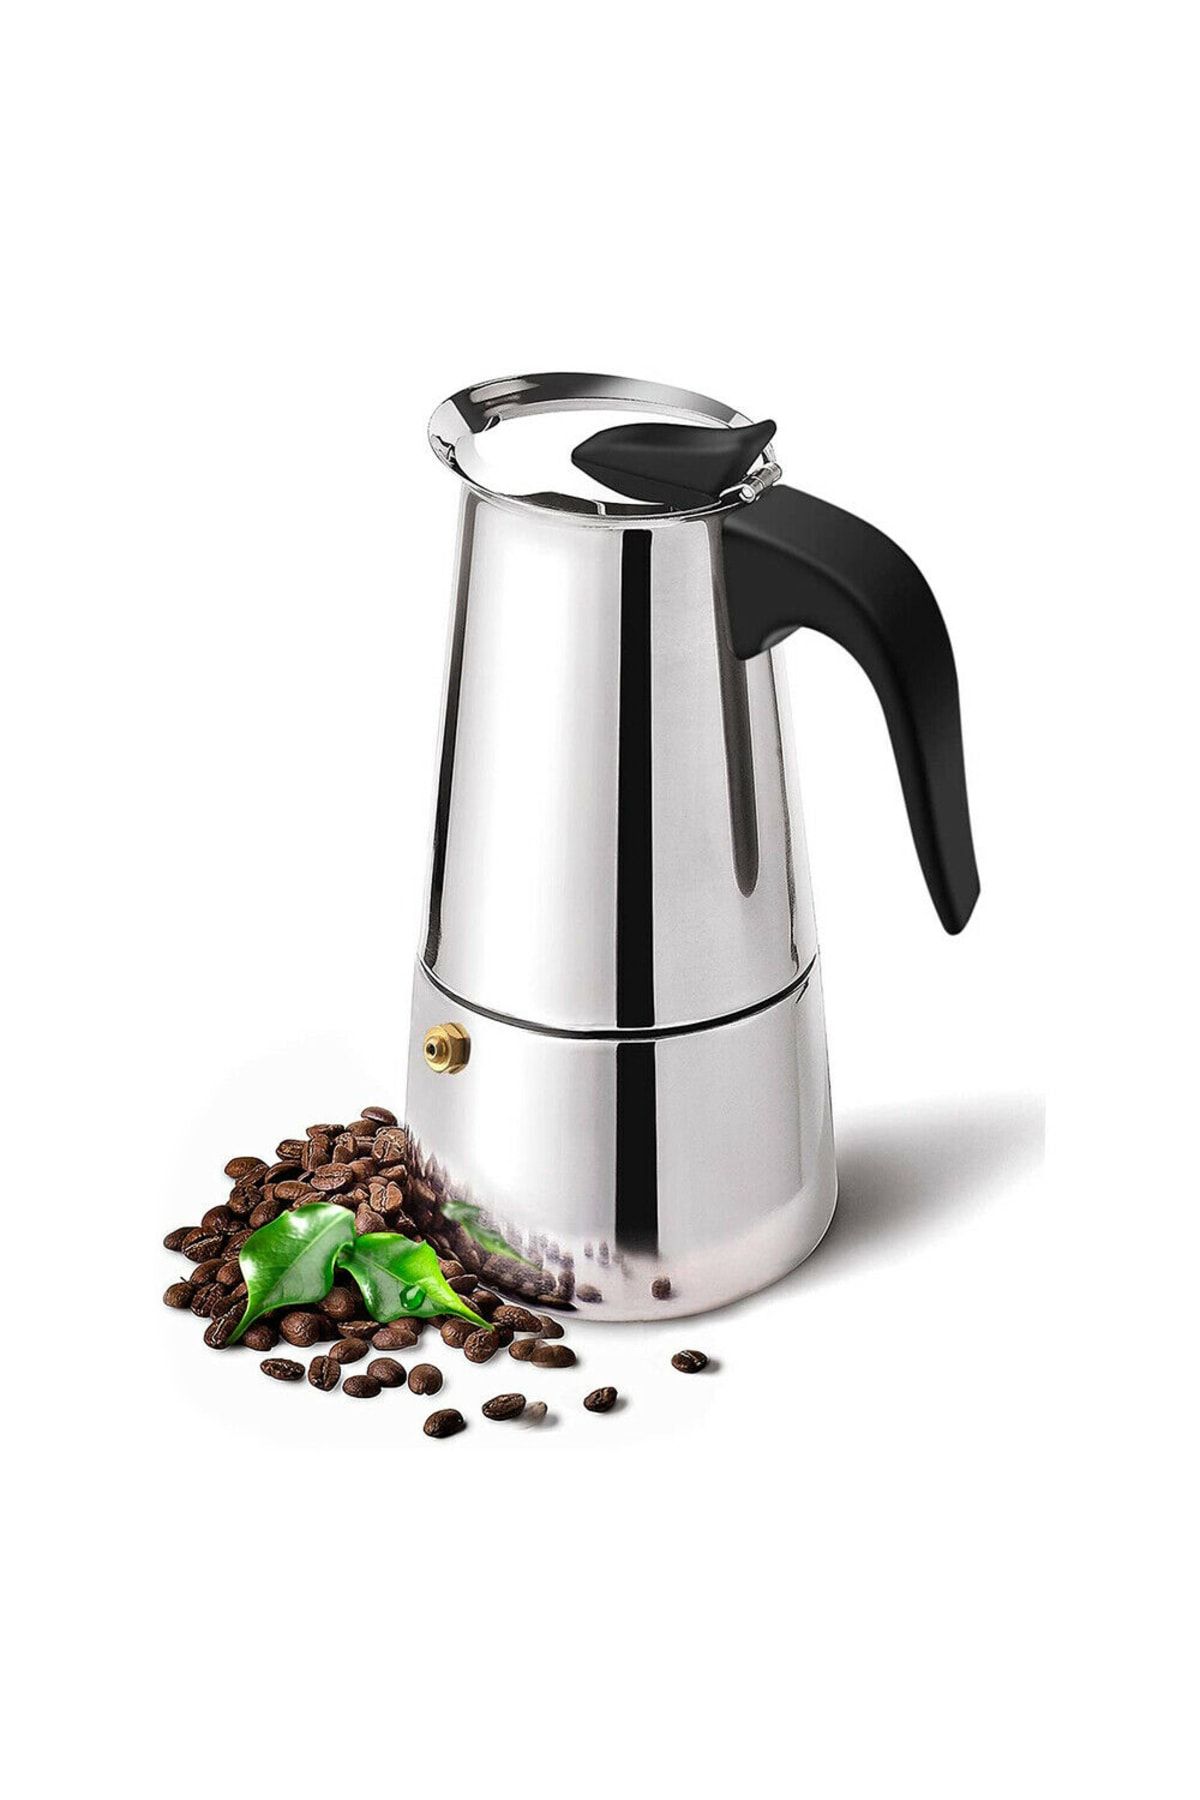 Weather Forecast Paslanmaz Çelik Ocak Üstü 6 Cup Fincan Moka Pot Espresso Cin285-6